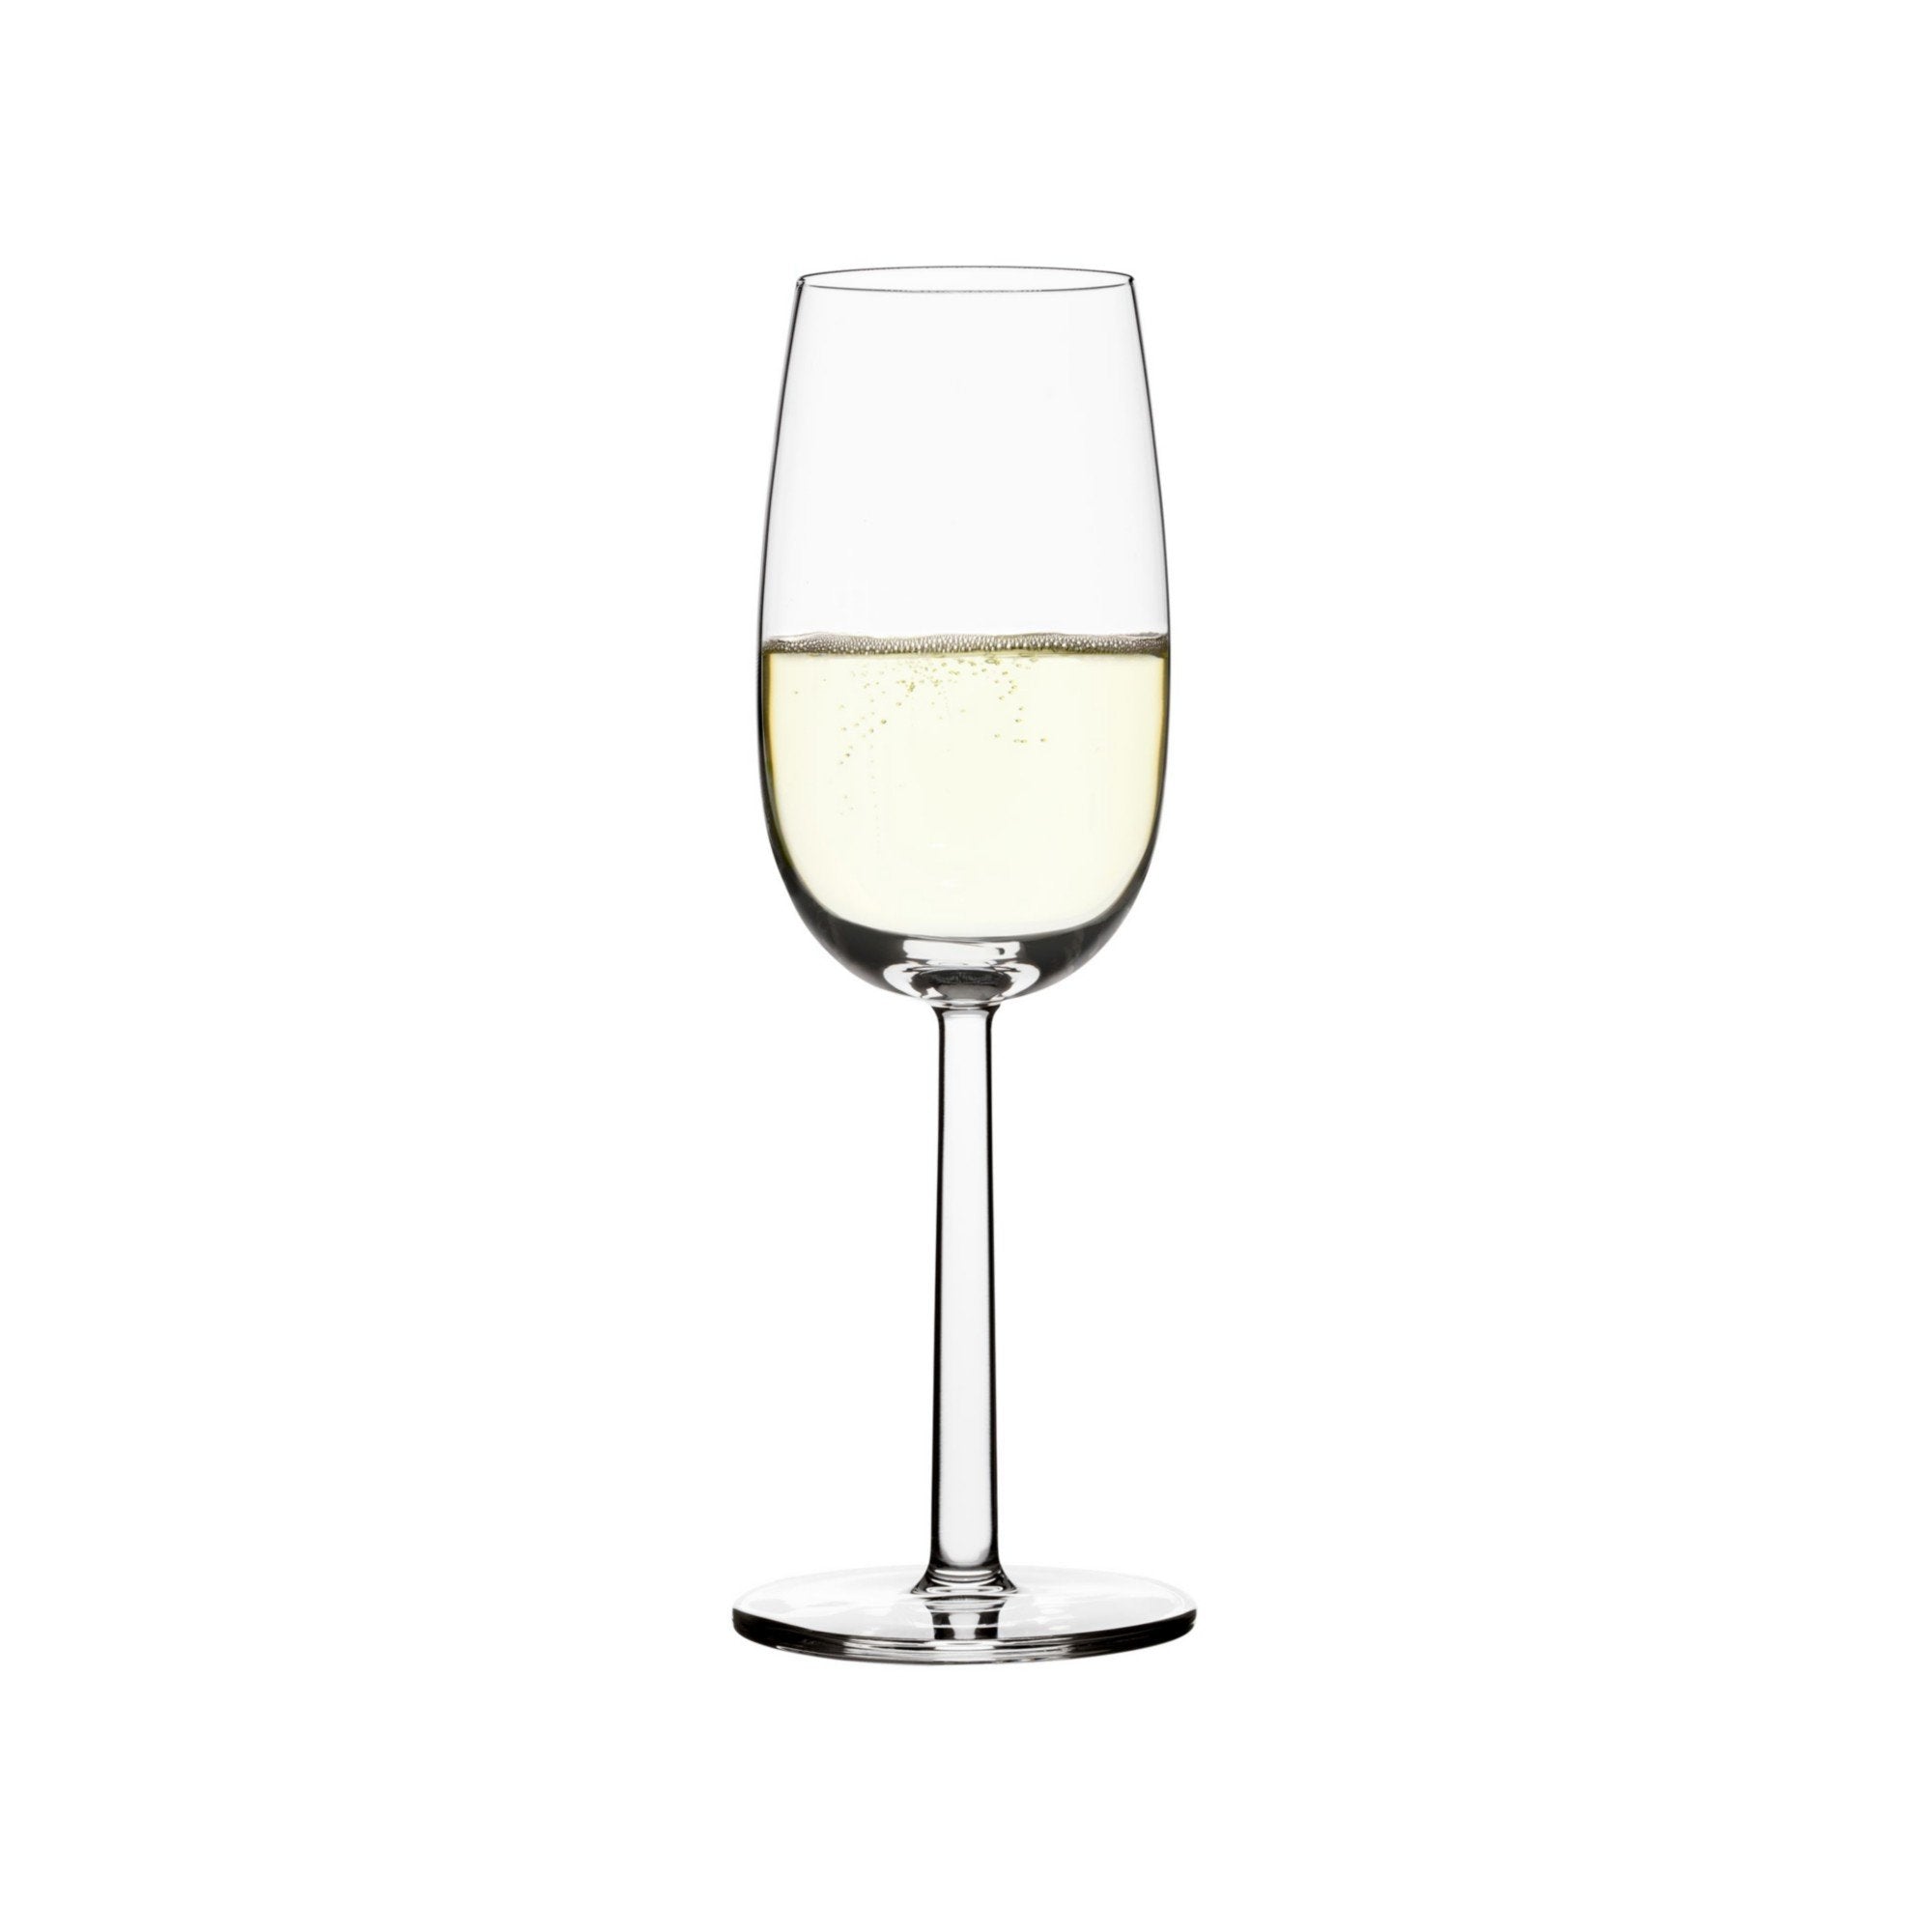 Iittala Raami Champagne Glass Clear 2pcs, 24cl